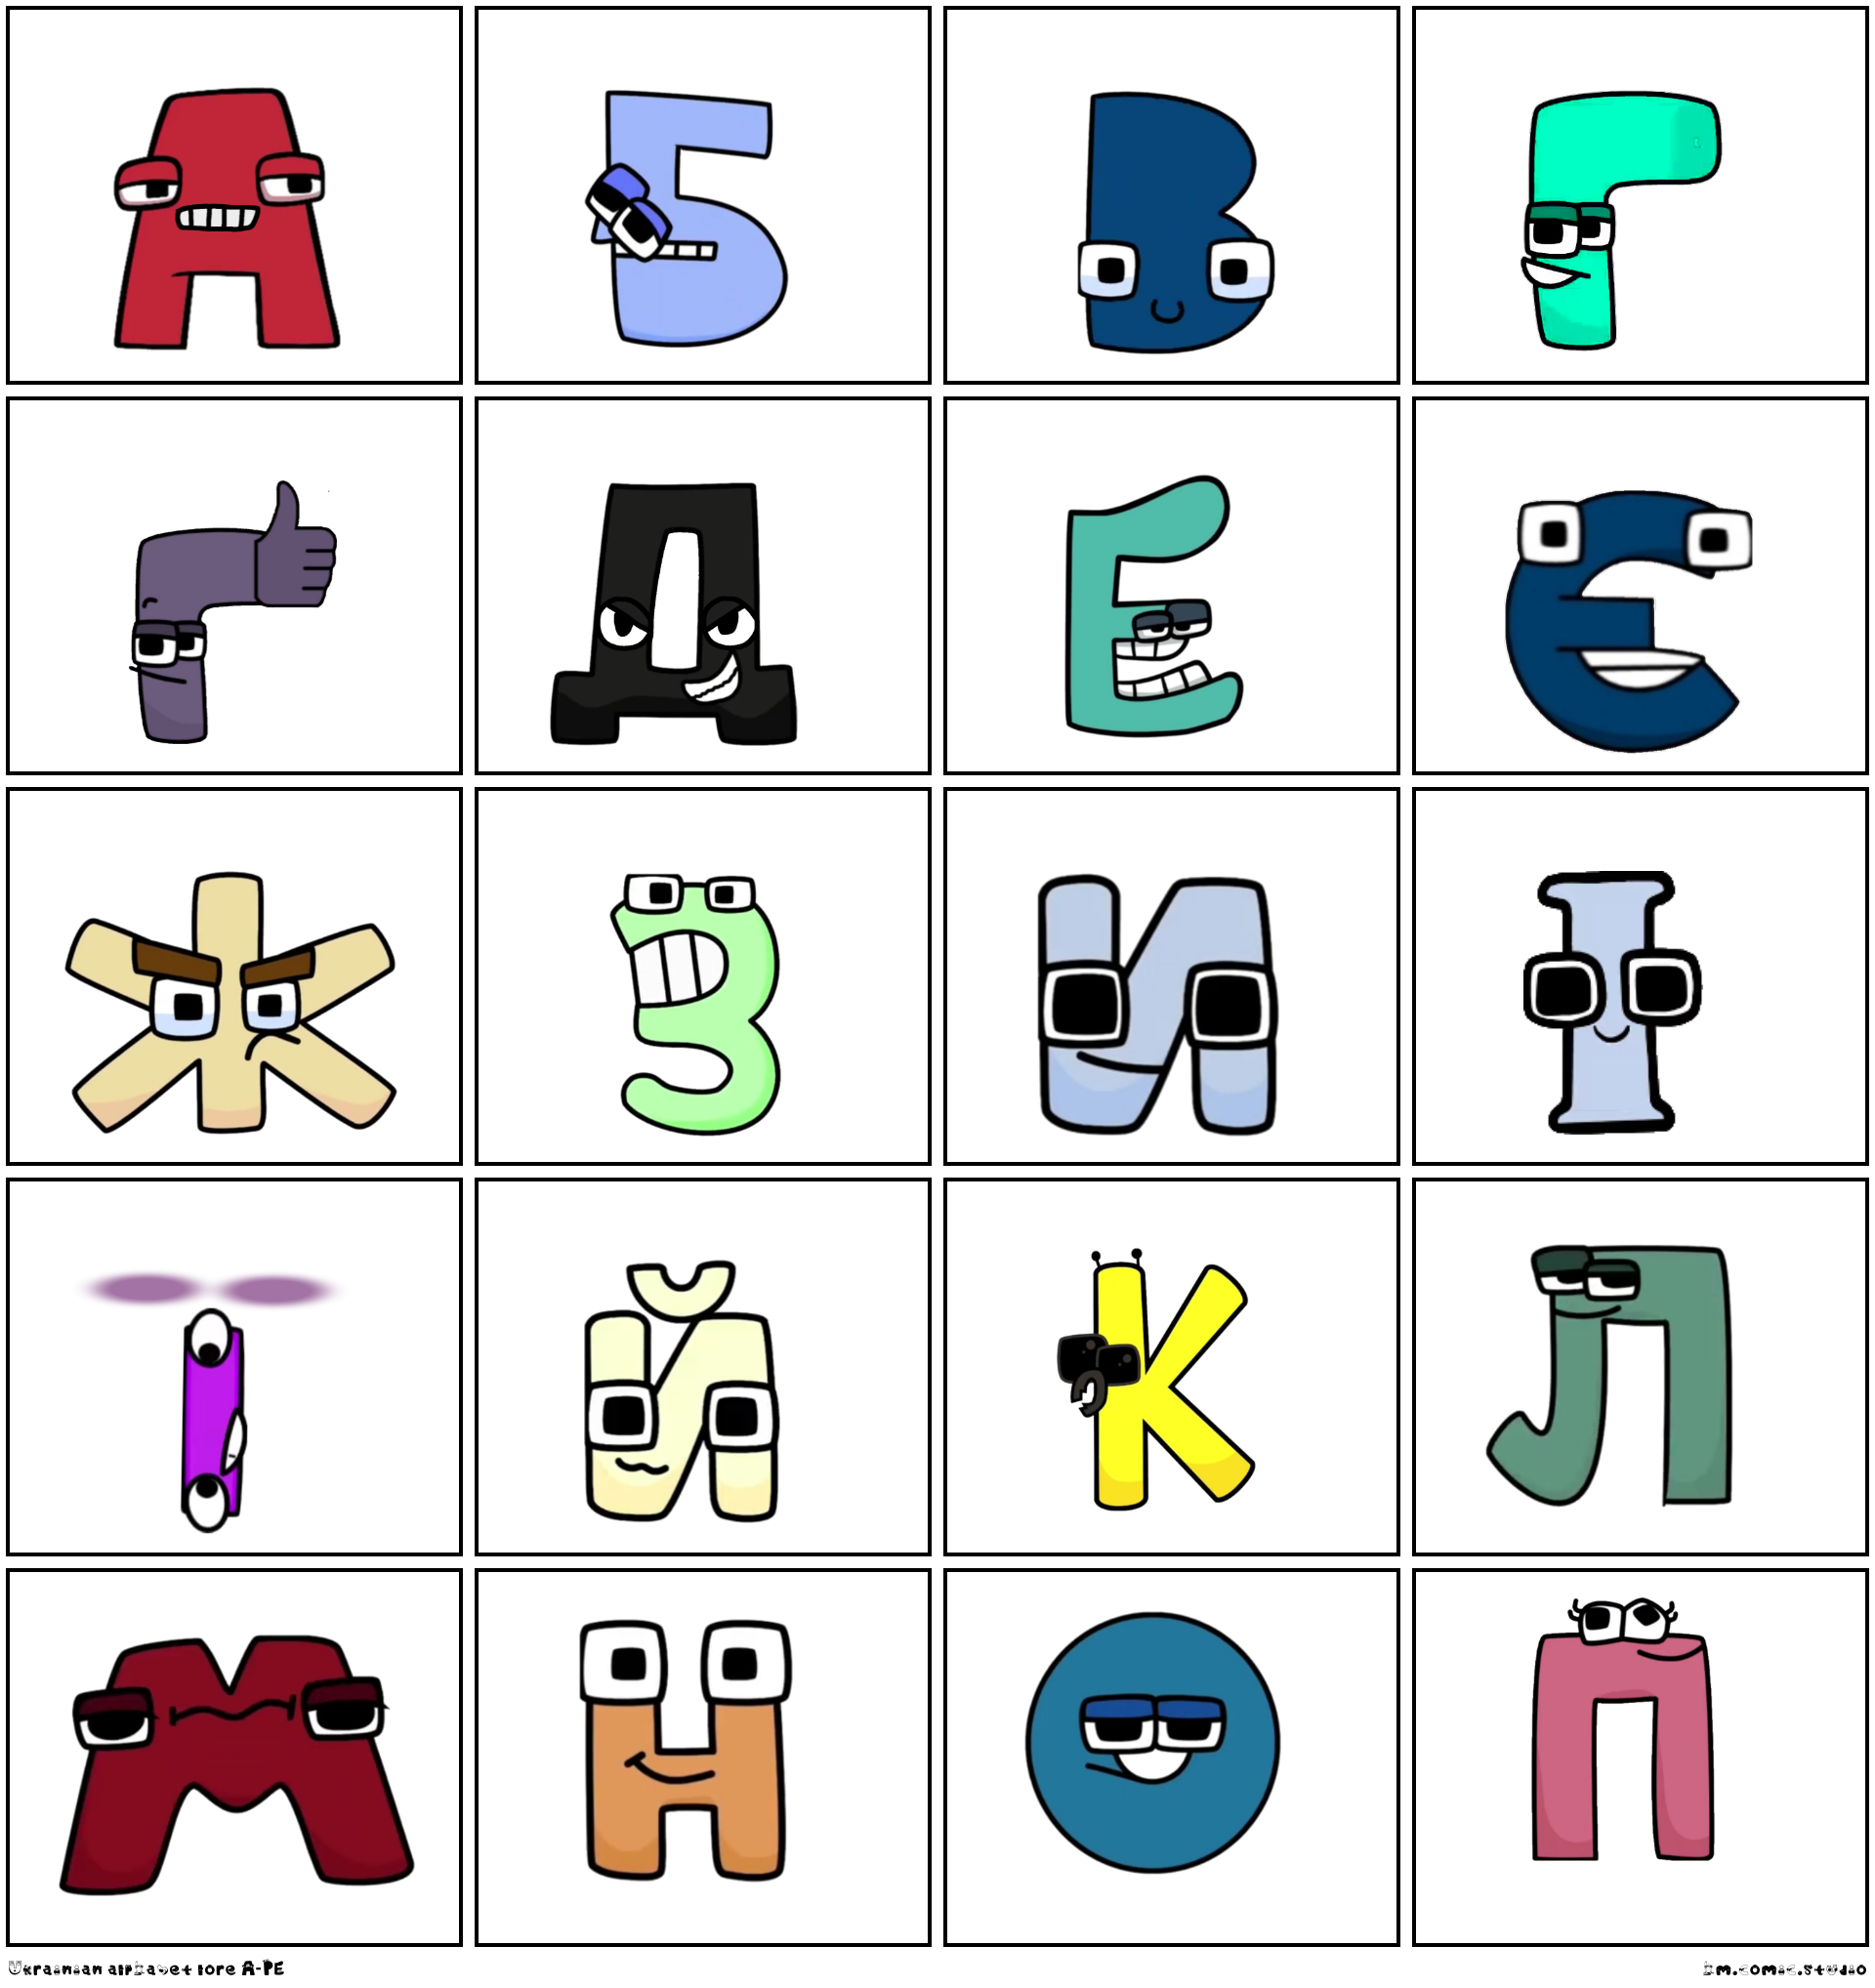 Ukraine Alphabet lore Letters - Comic Studio